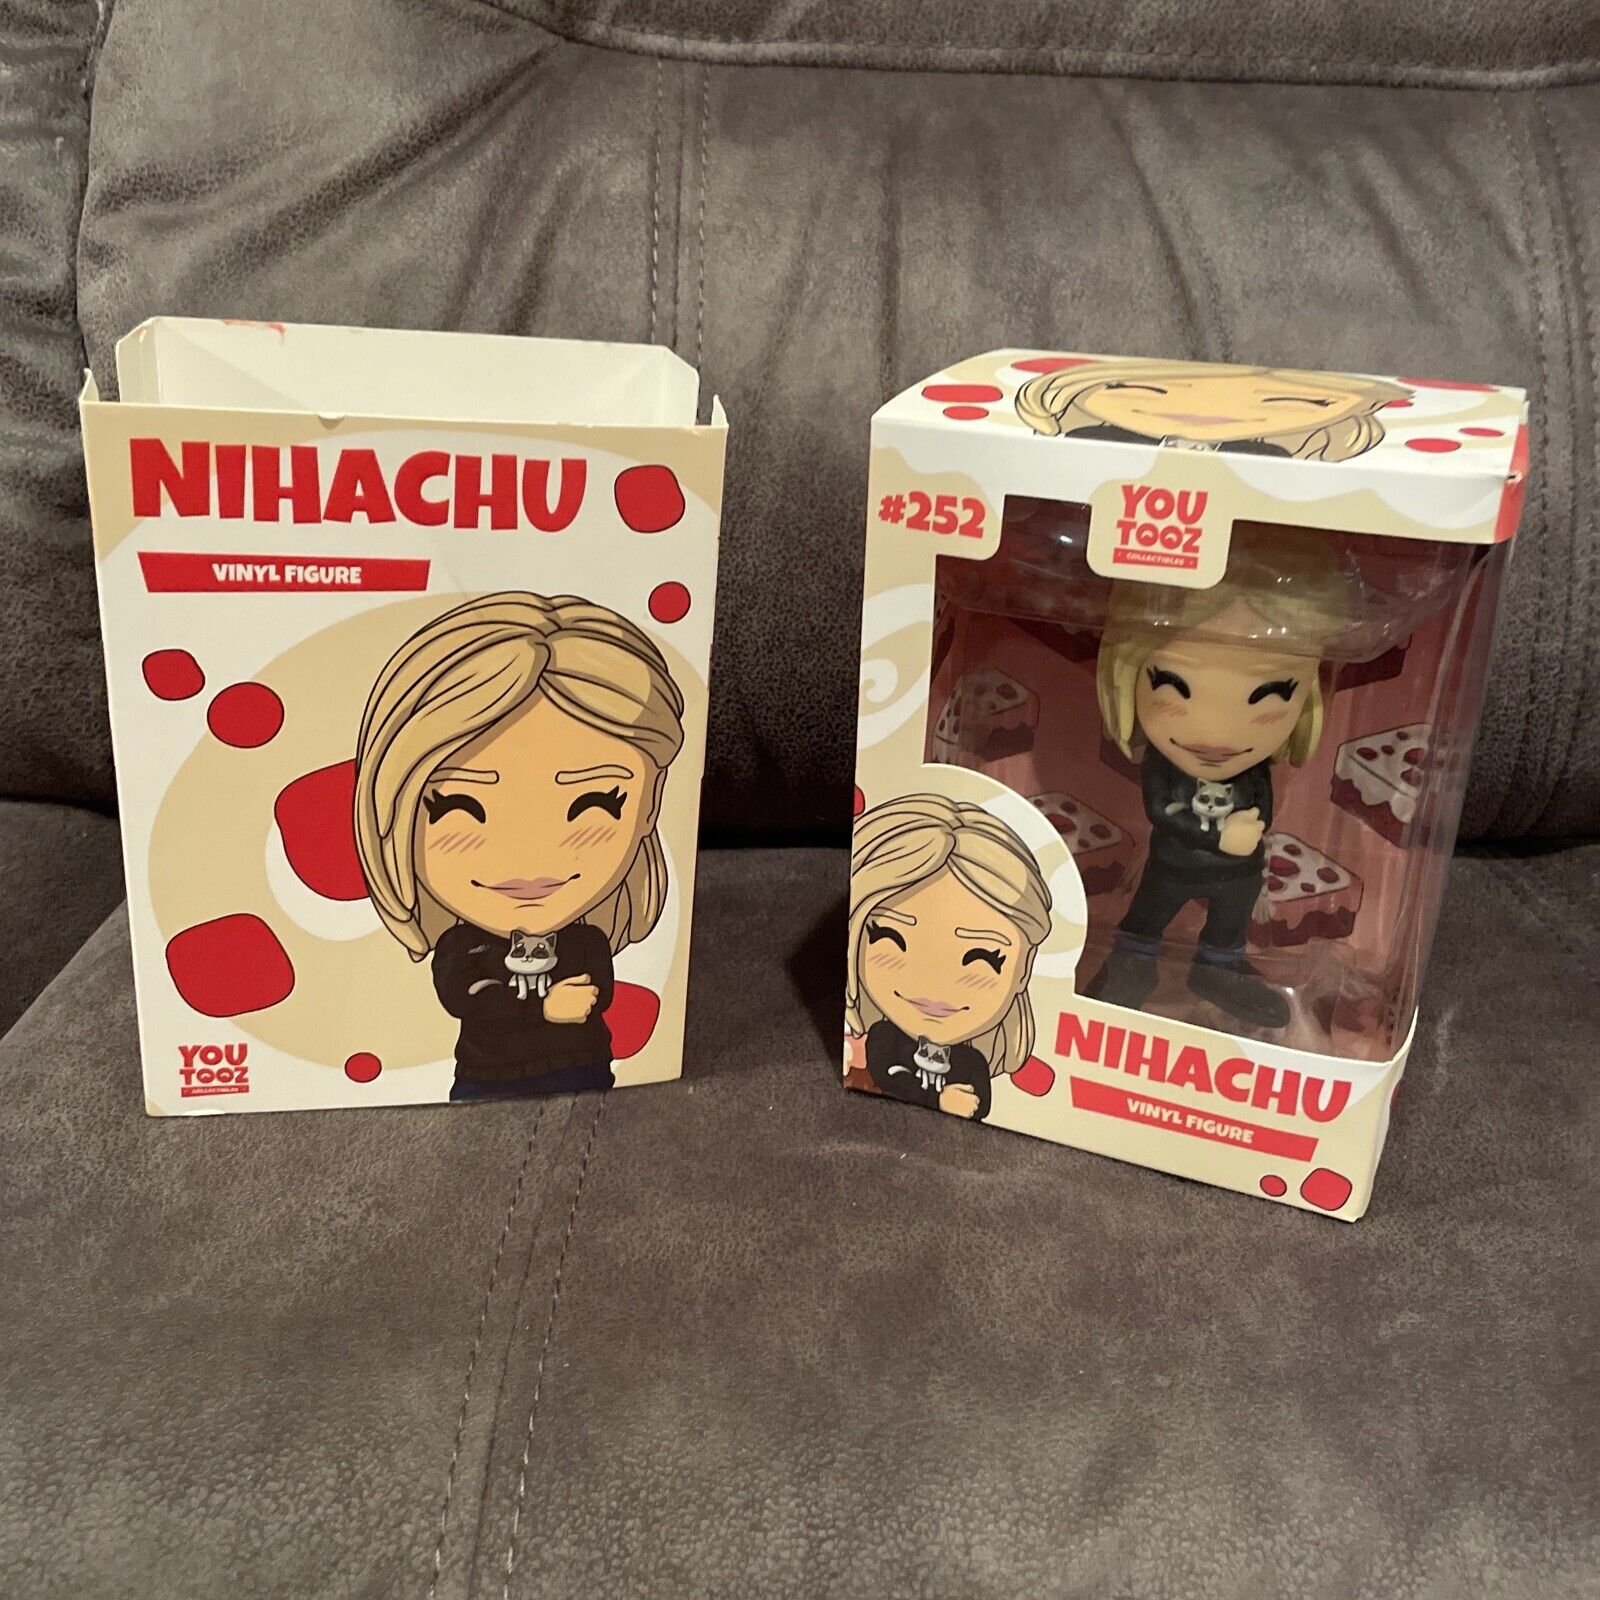 Nihachu #252 YouTooz Vinyl Figure Anime Box Not Perfect Rare